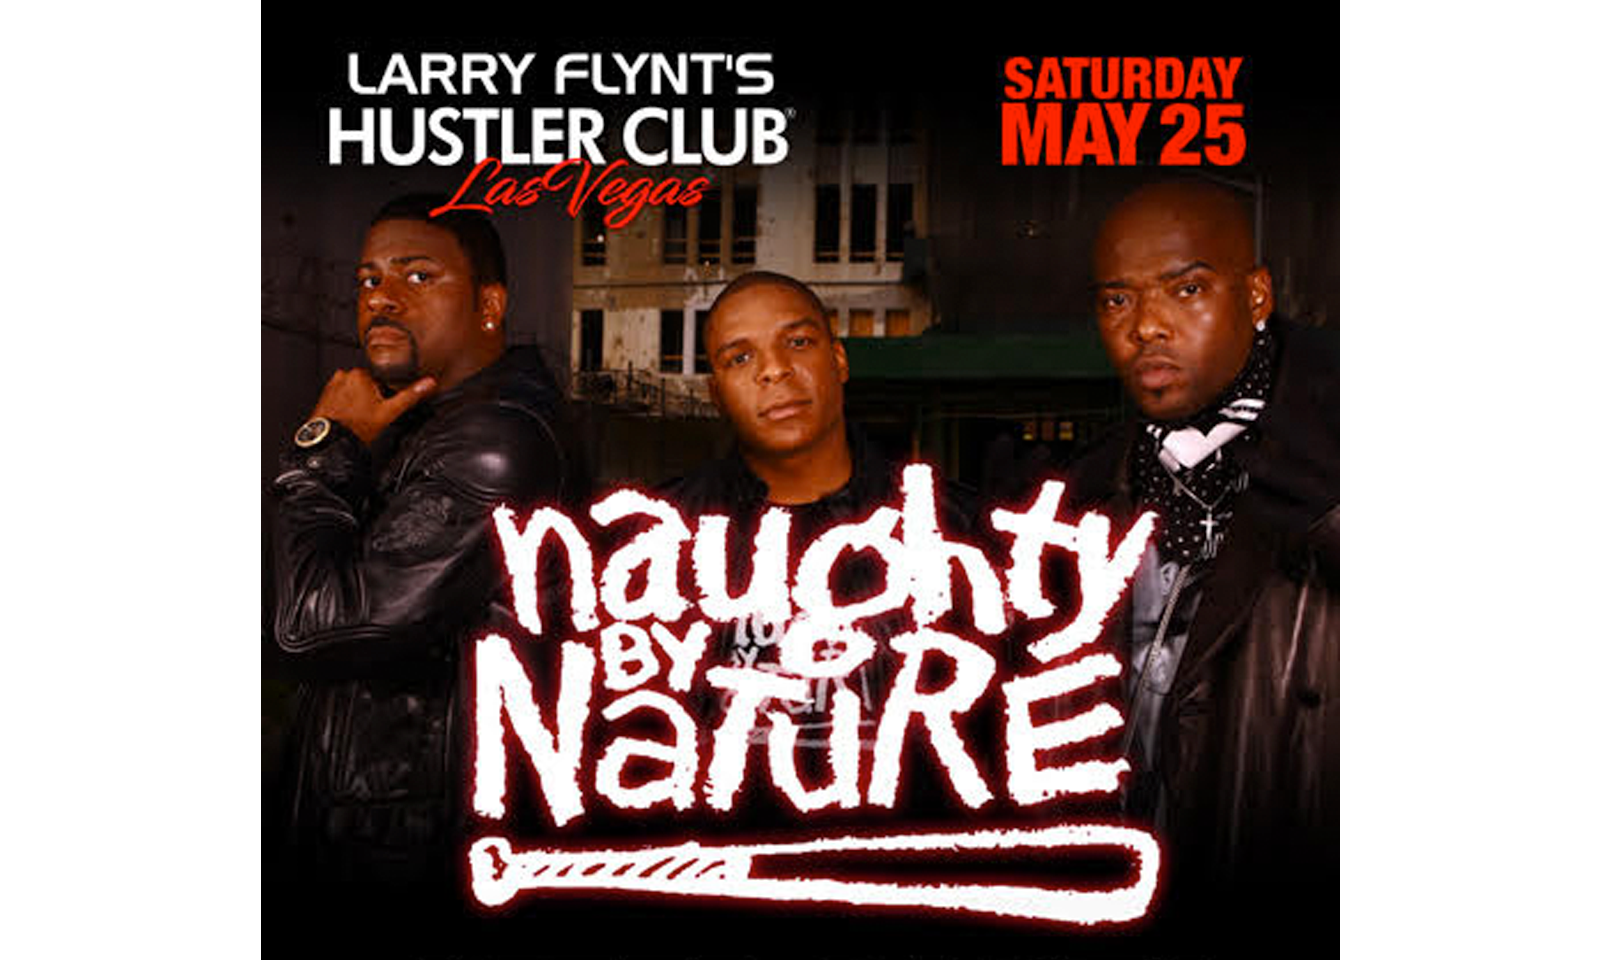 Larry Flynt’s Hustler Club in Las Vegas Hosting Naughty by Nature